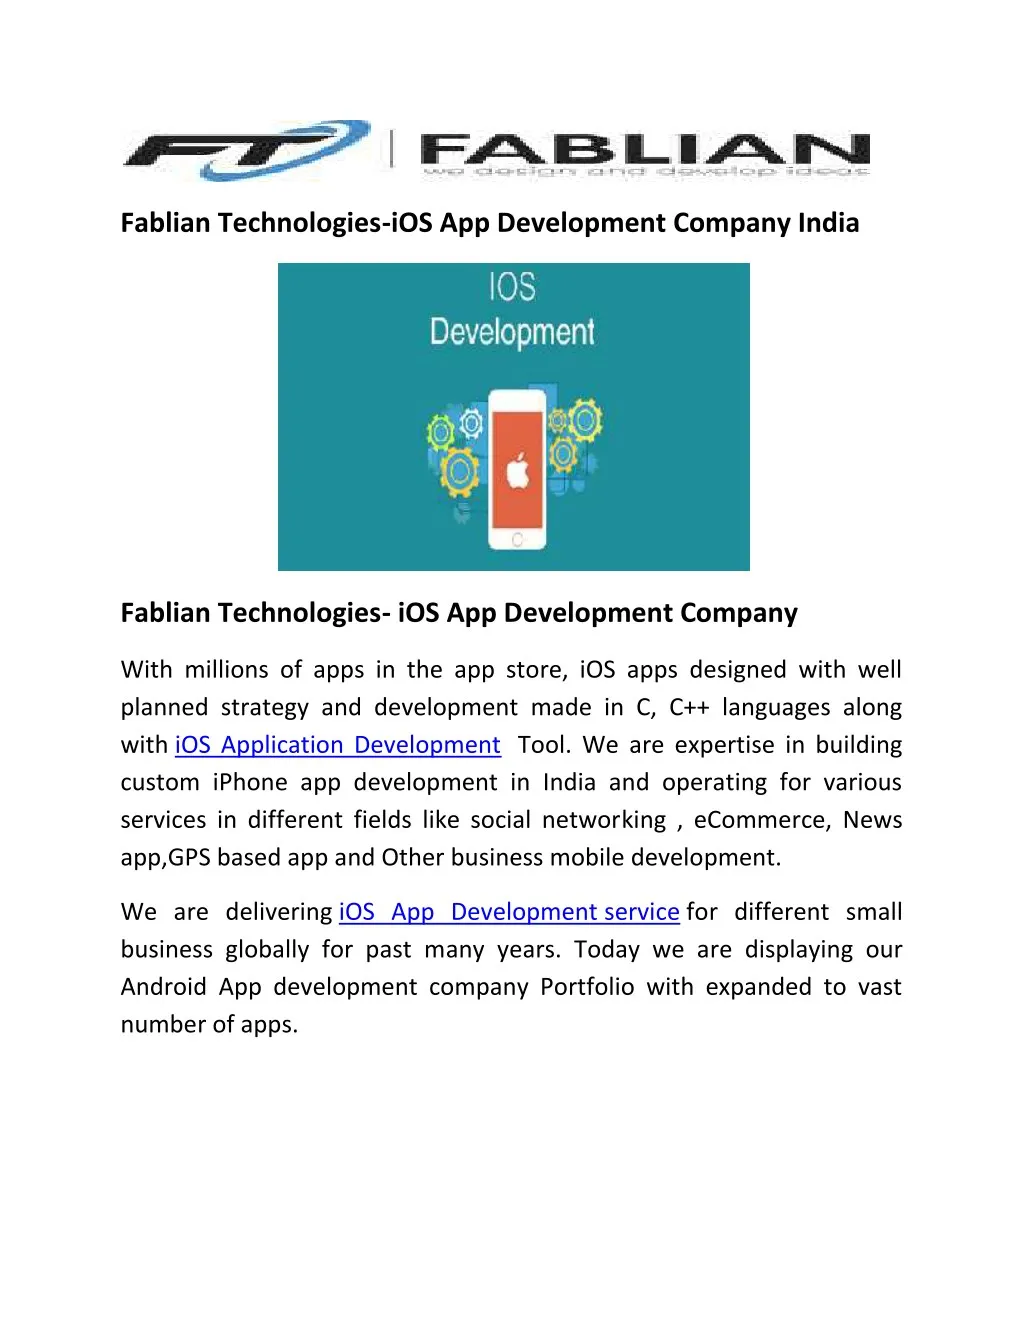 fablian technologies ios app development company n.